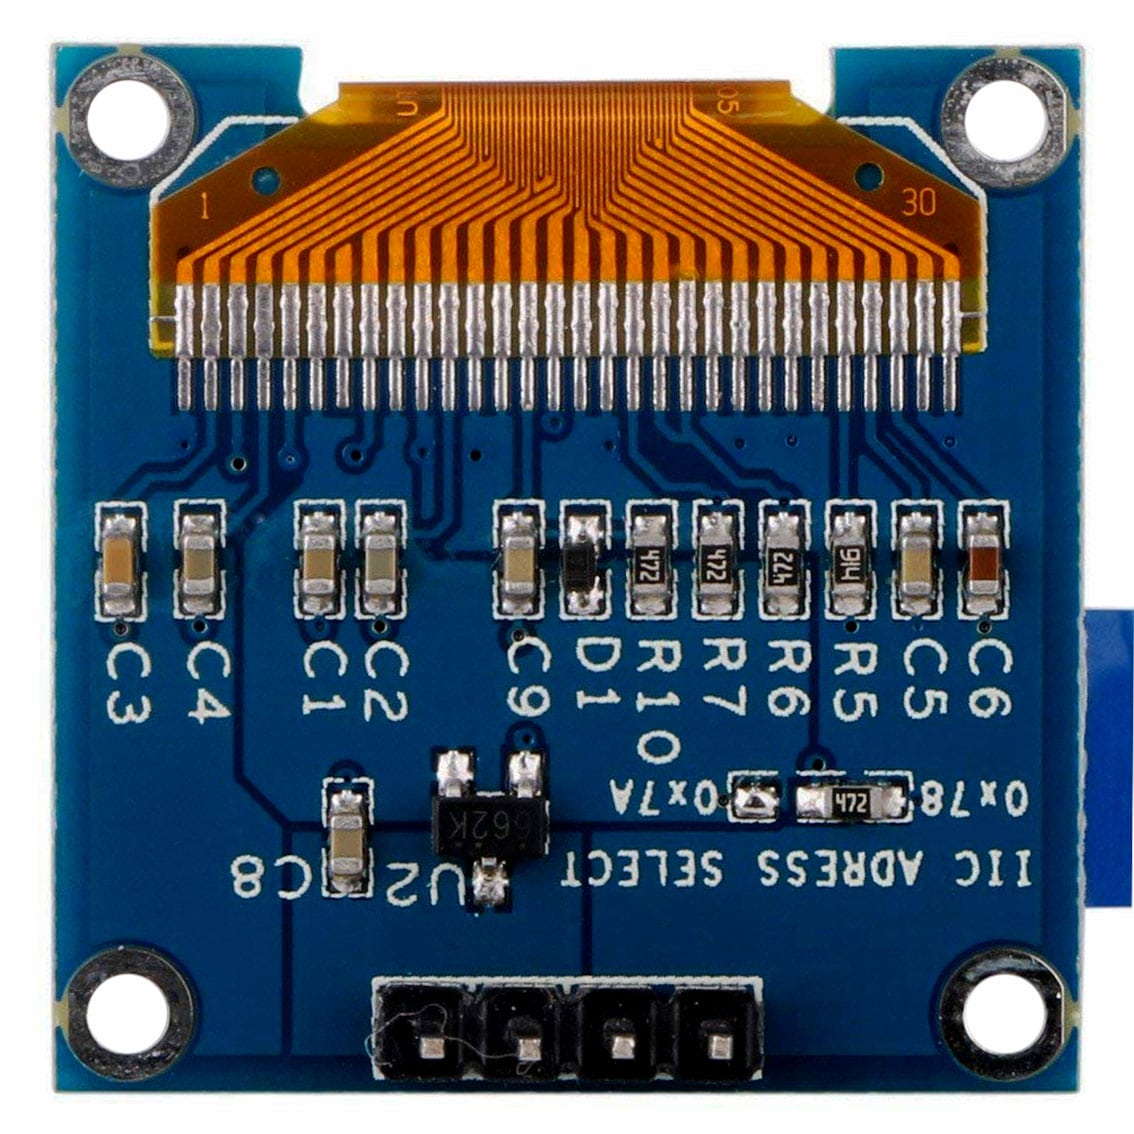 0.96 Inch Blue OLED Serial Display Module – 128 x 64 2